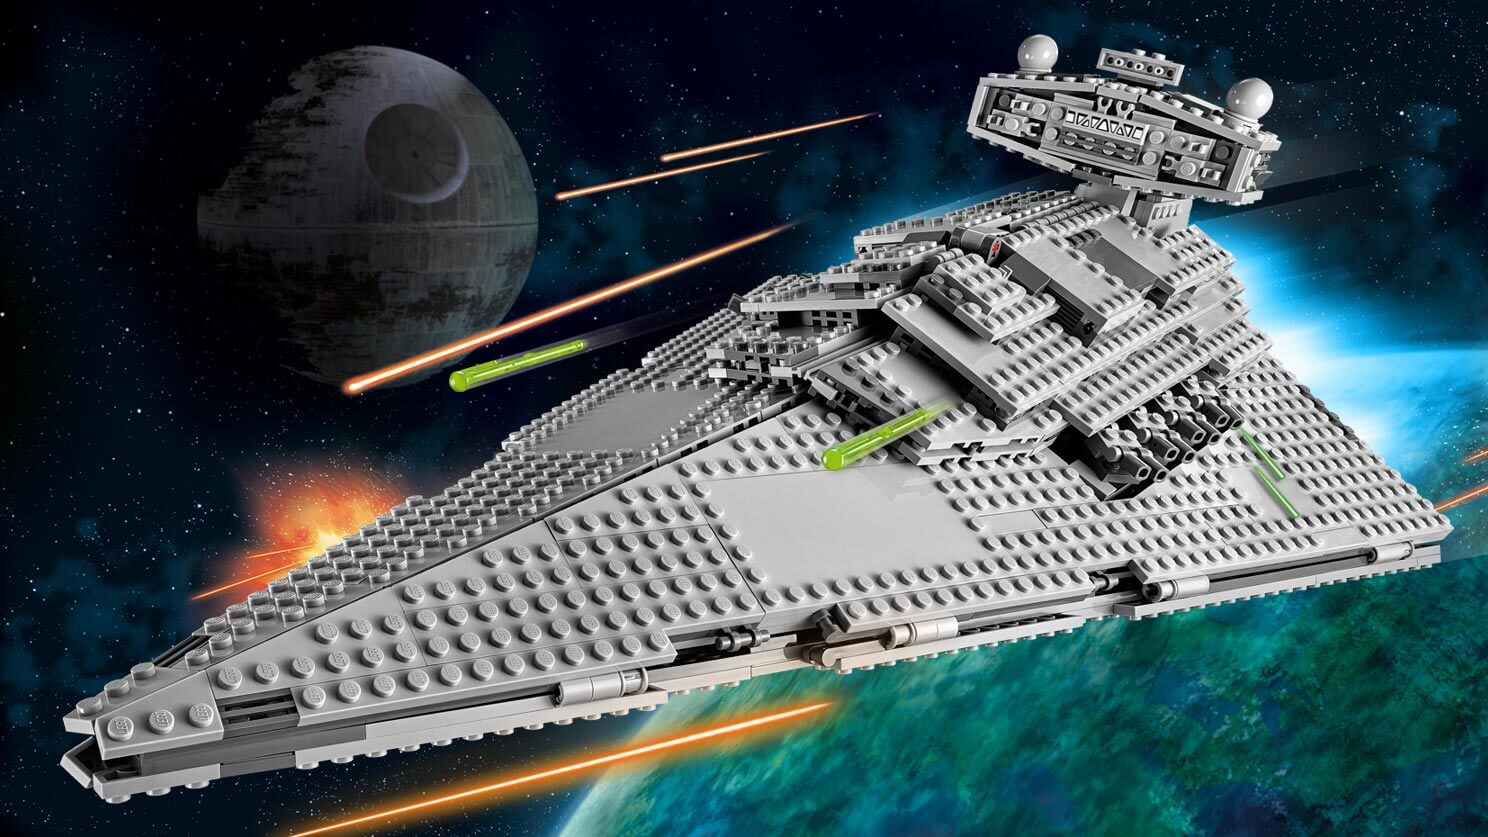 Lego Star Wars Star Destroyer